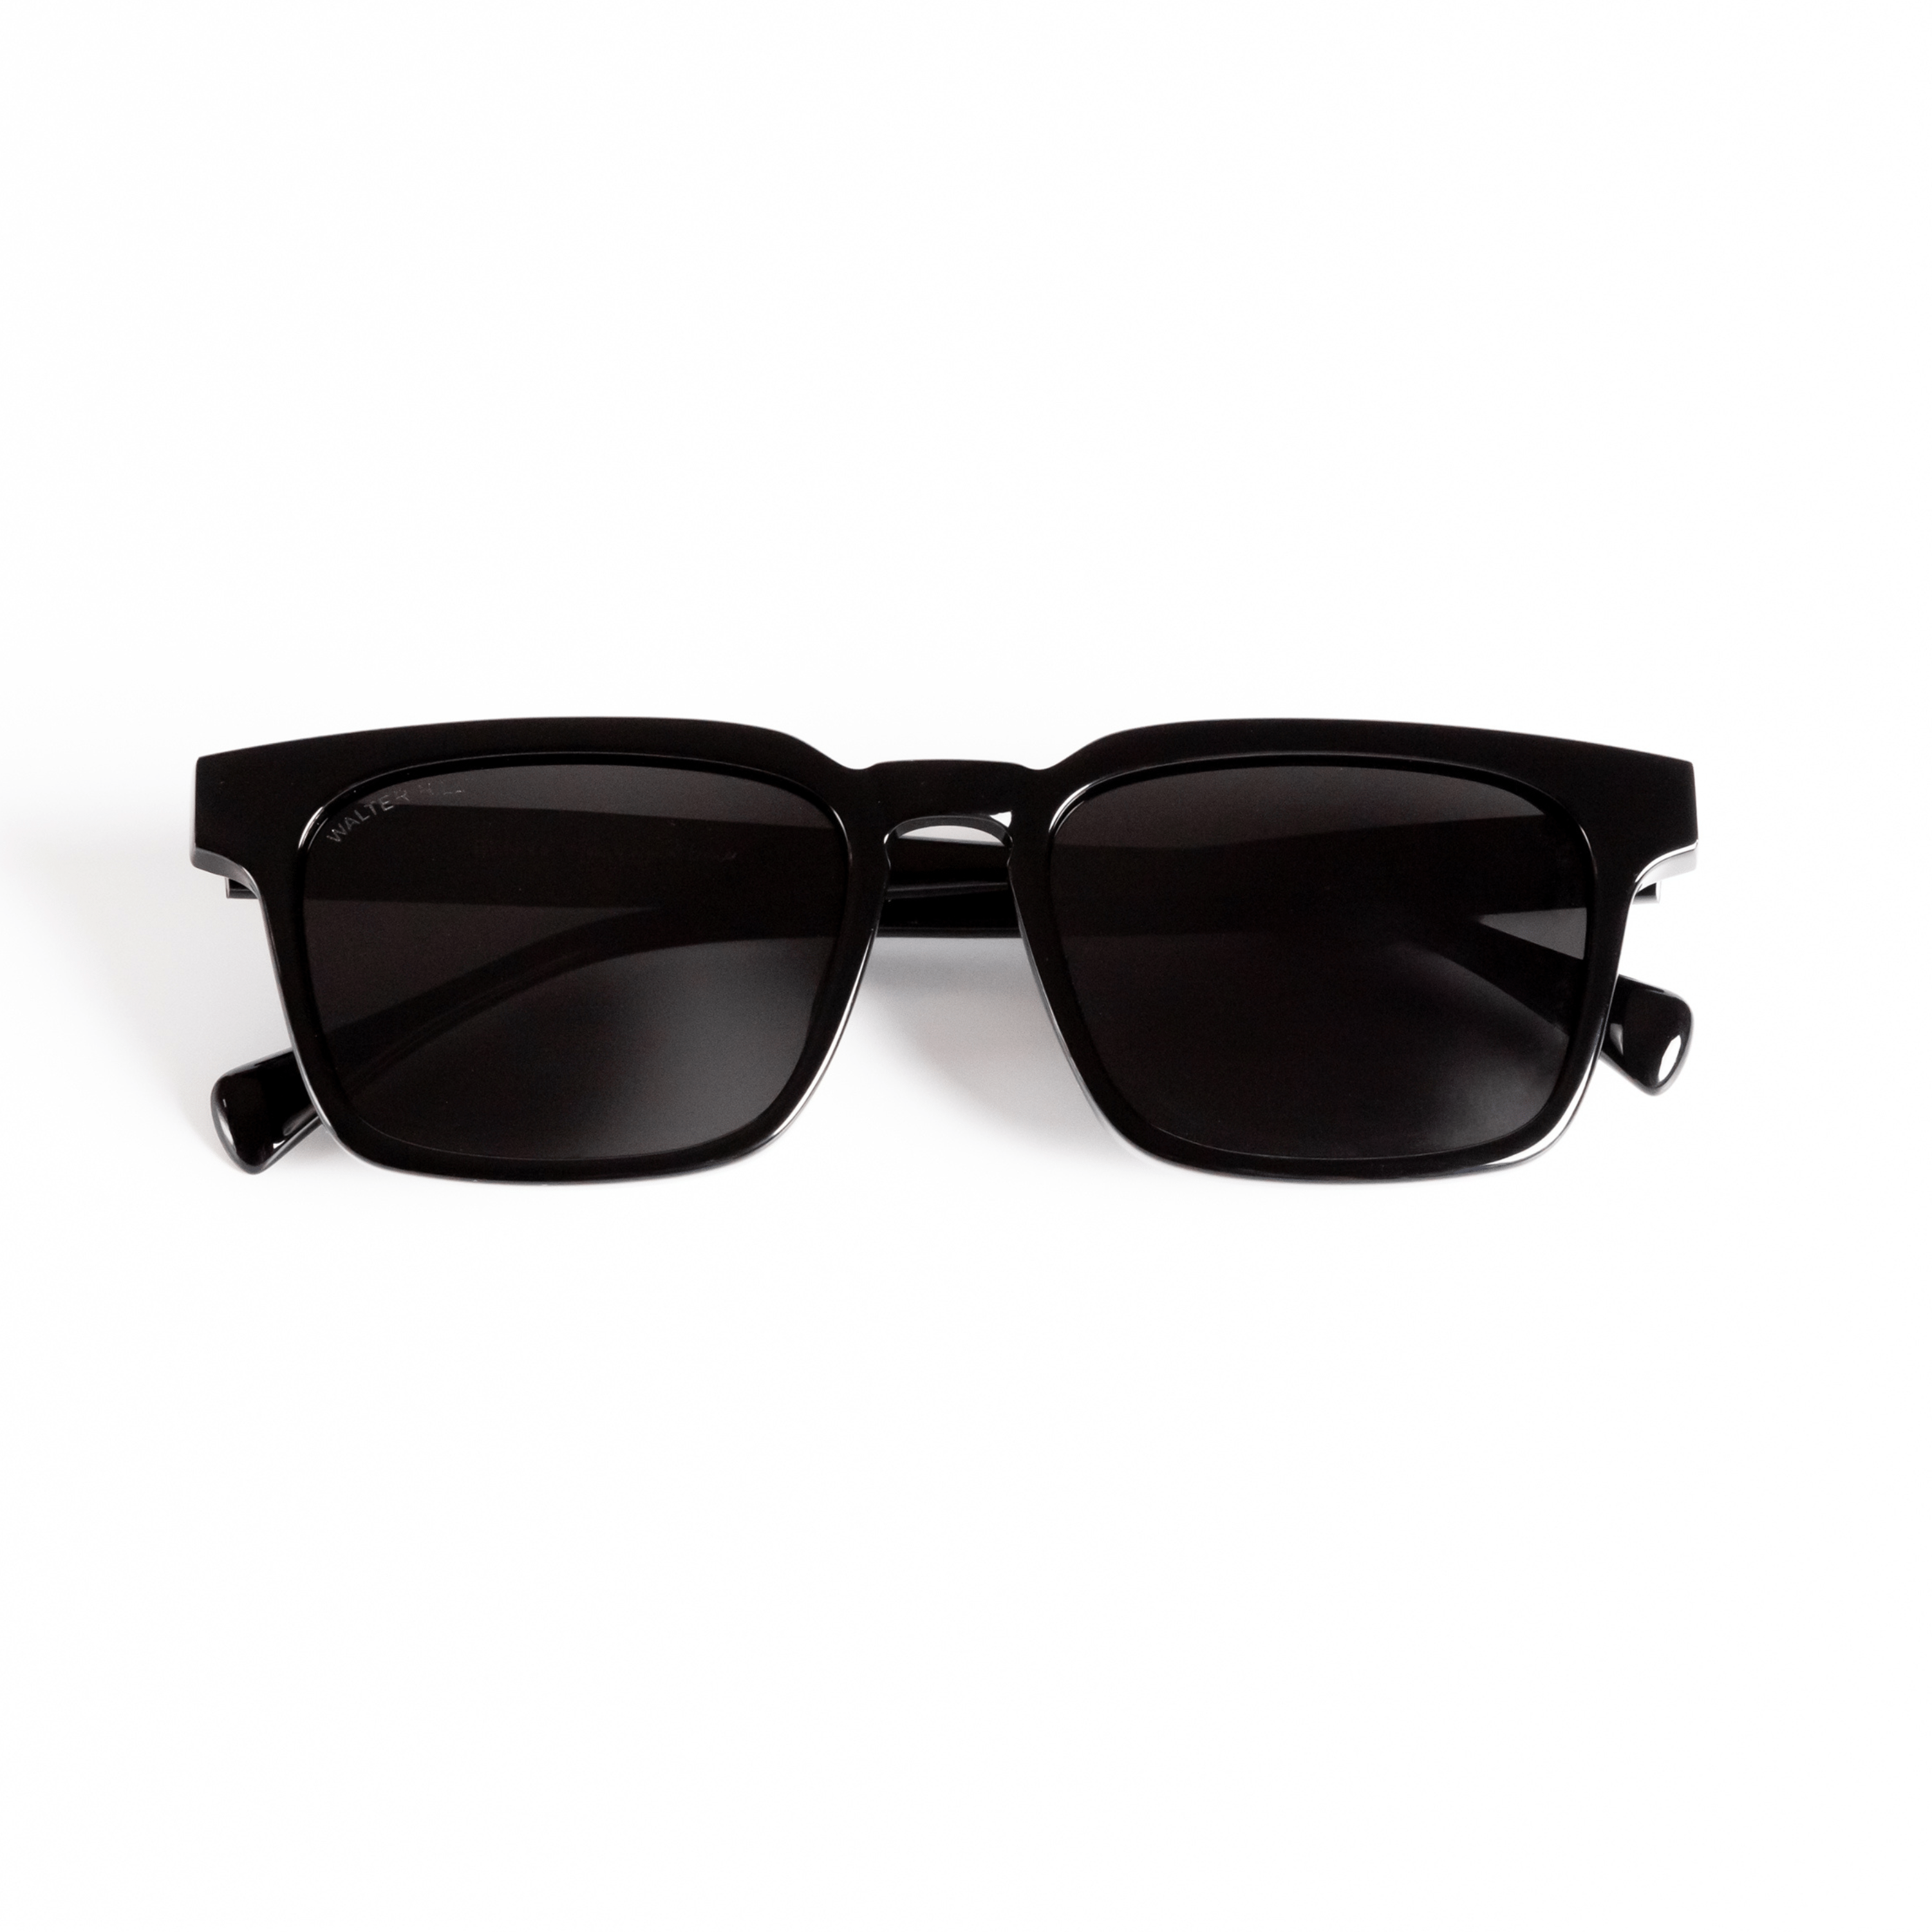 Walter Hill Sunglasses Standard / Polarized Cat.3 / Mazzucchelli Acetate BENNY - Black